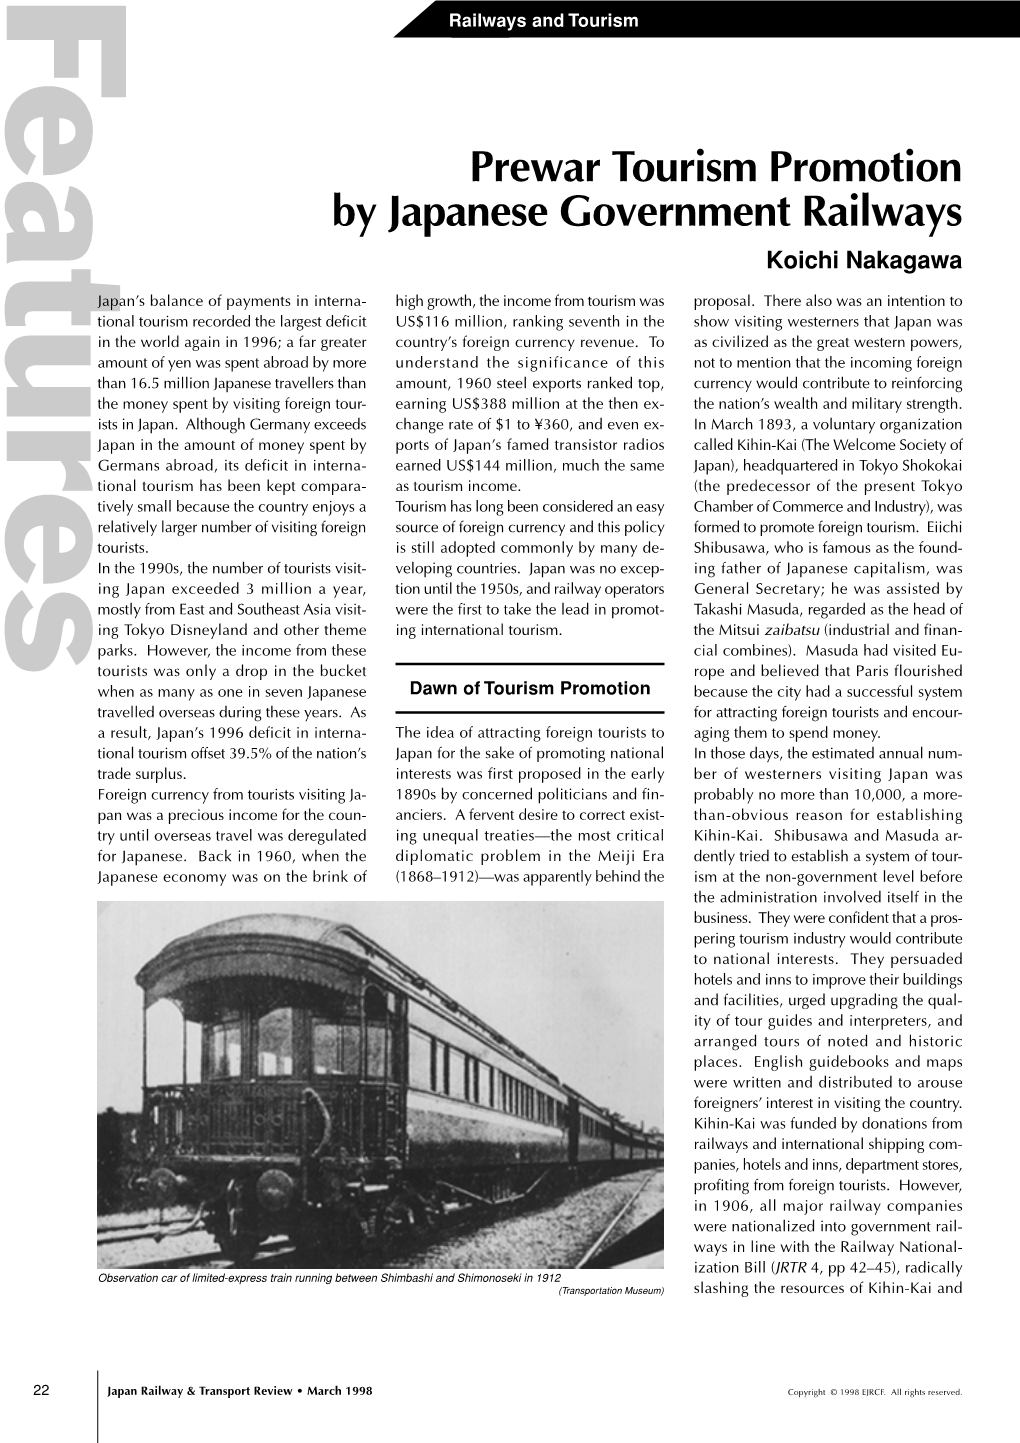 Prewar Tourism Promotion by Japanese Government Railways Koichi Nakagawa